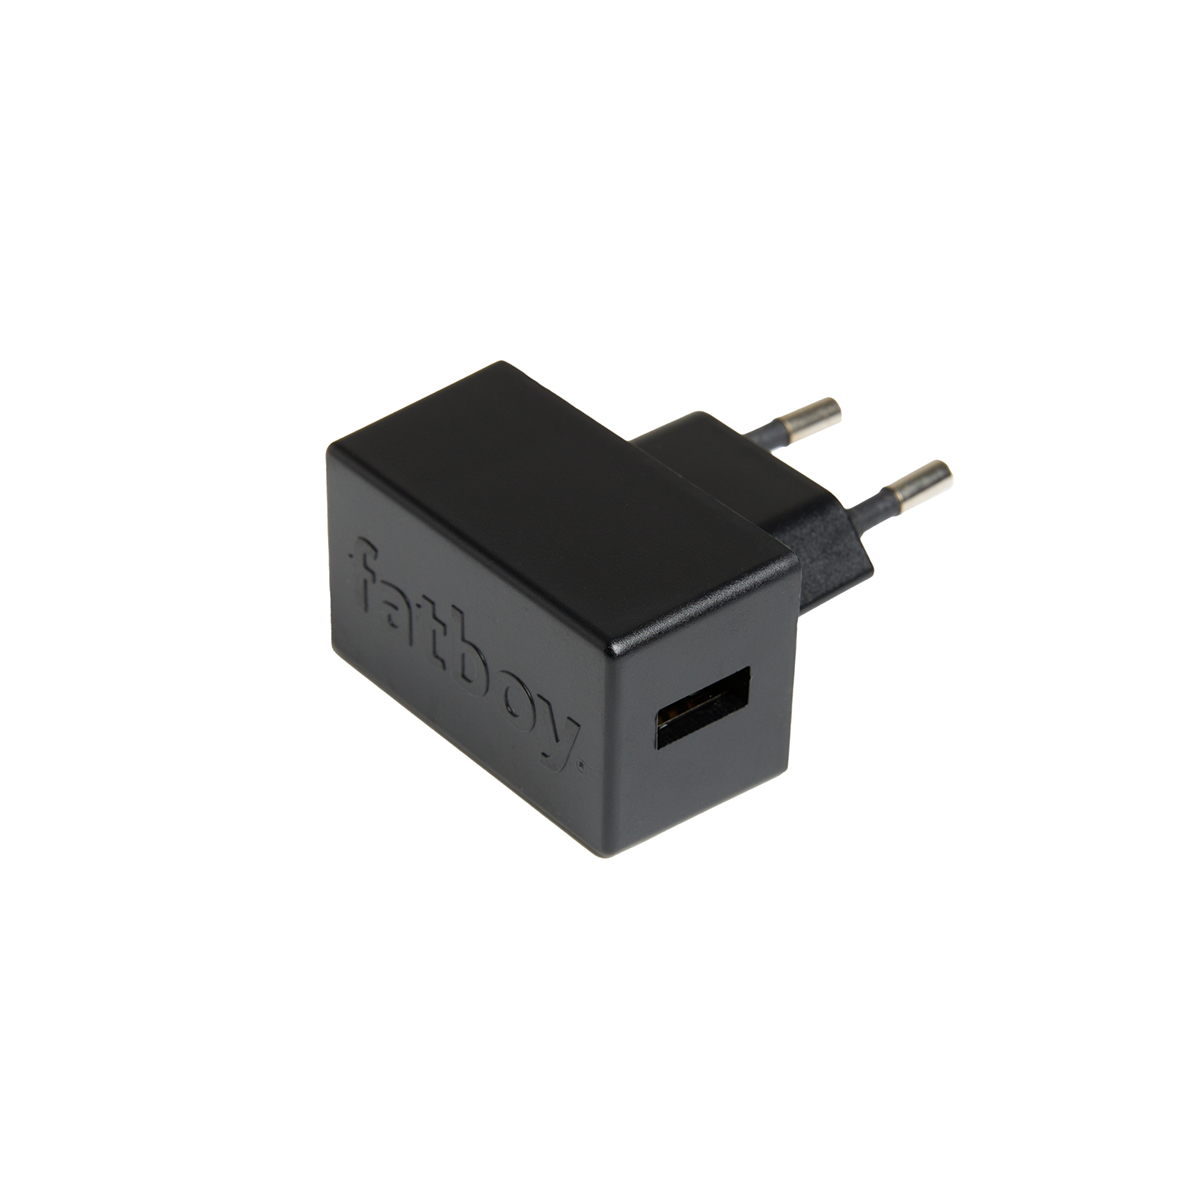 Beleuchtungszubehör EU plug (5V 1A) for USB charging cables